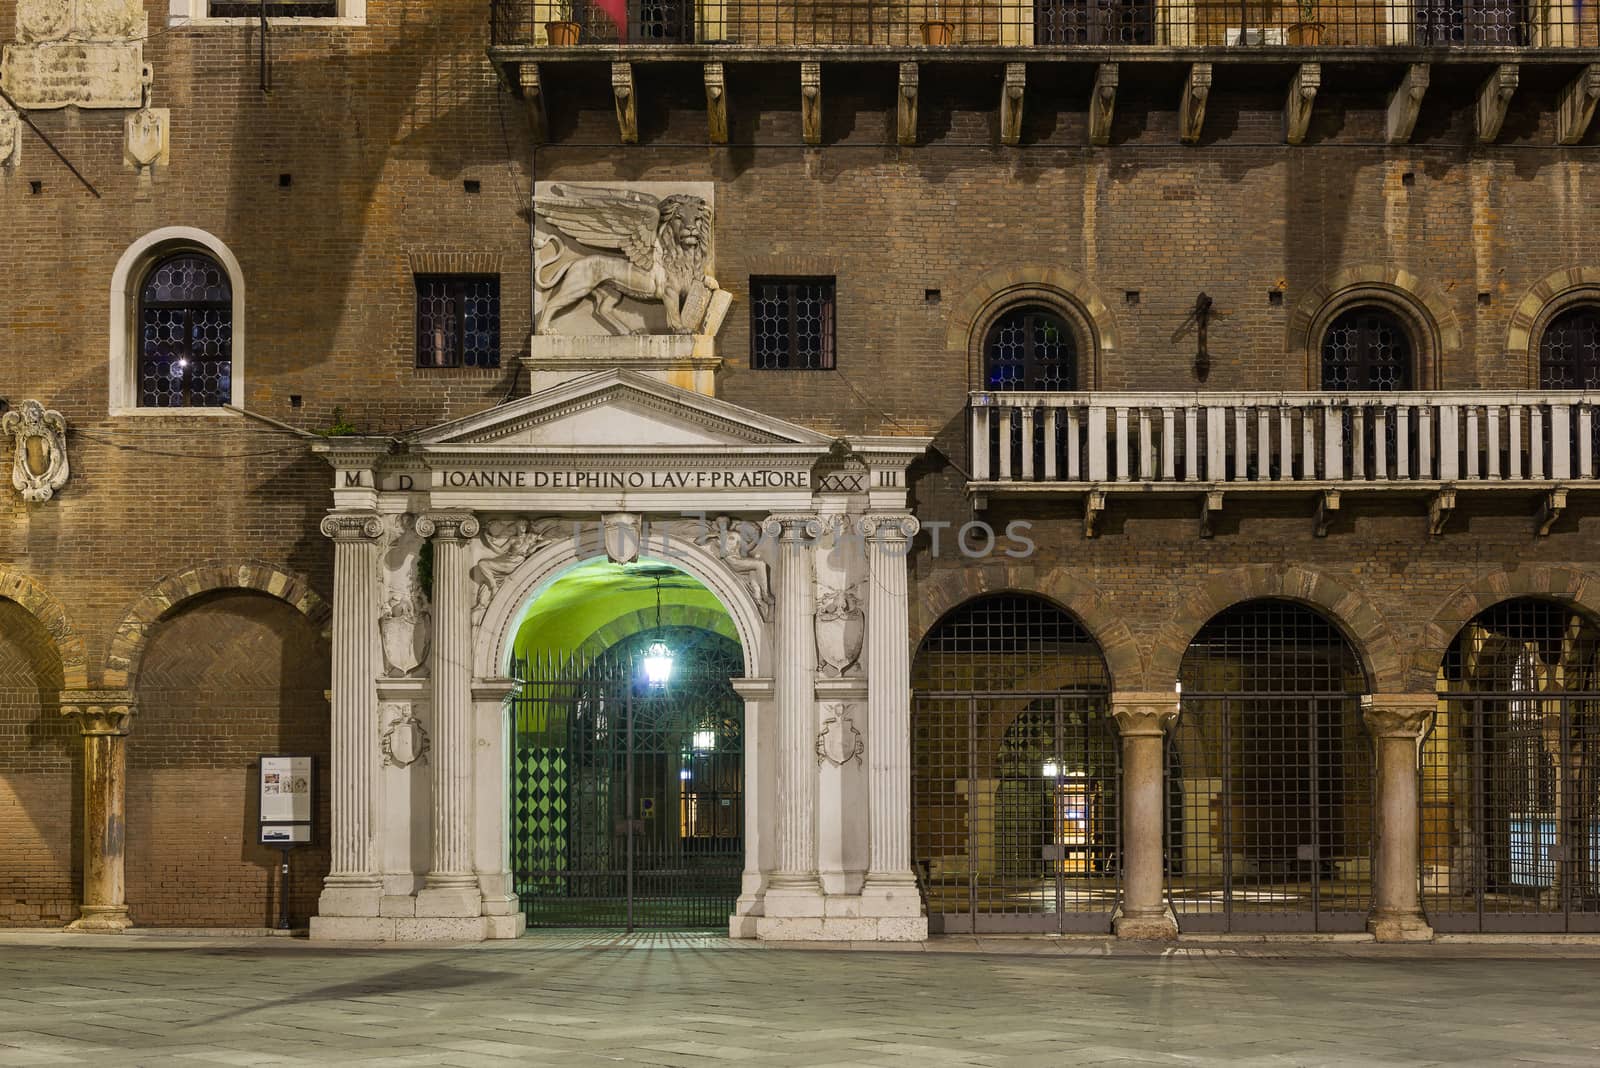 Nigtview of Piazza dei Signori in Verona by faabi